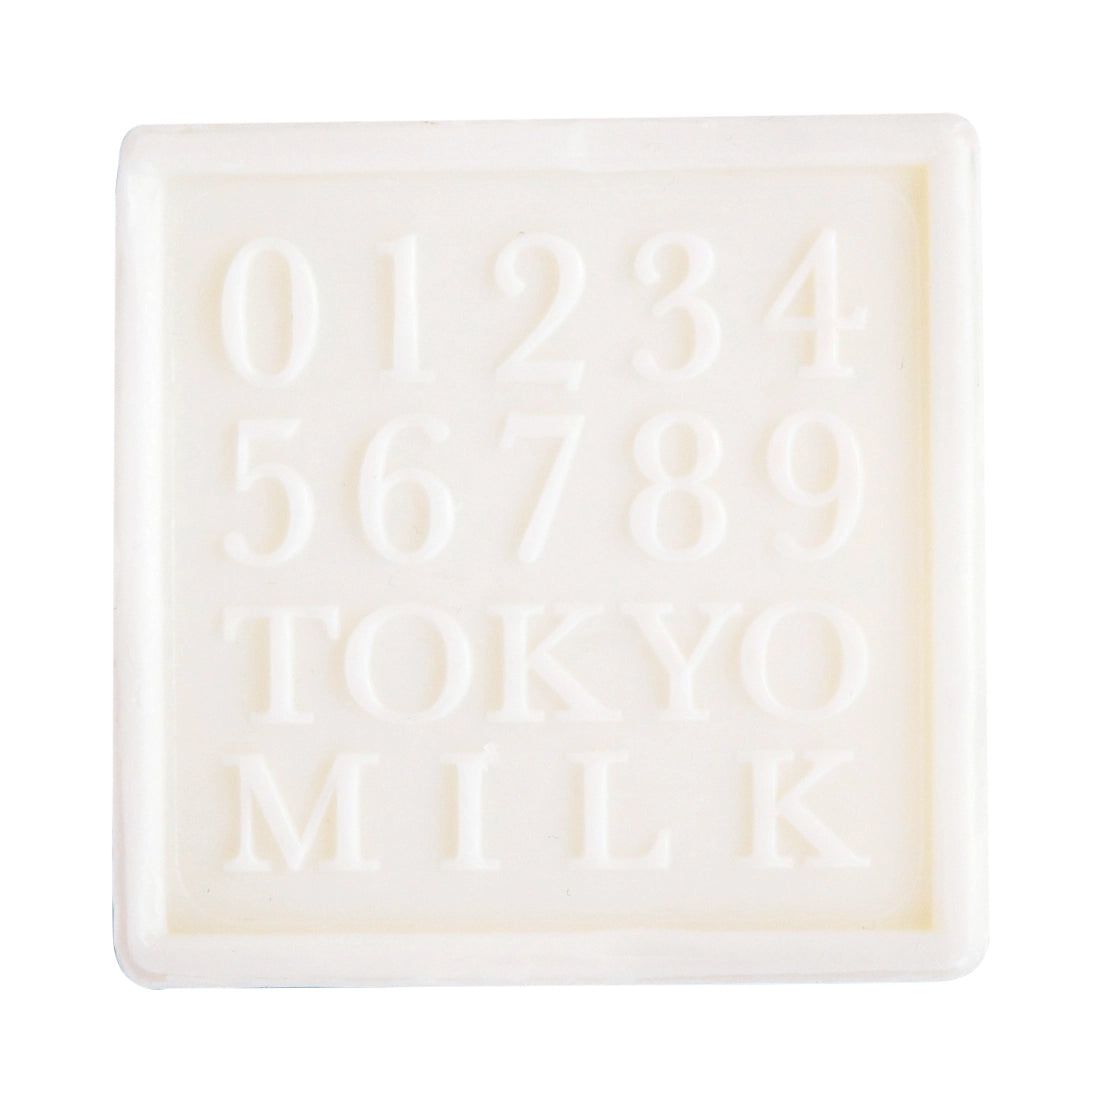 Tokyomilk "When You Look Good" Finest Perfumed Soap – Green Tea Fragrance - 4oz